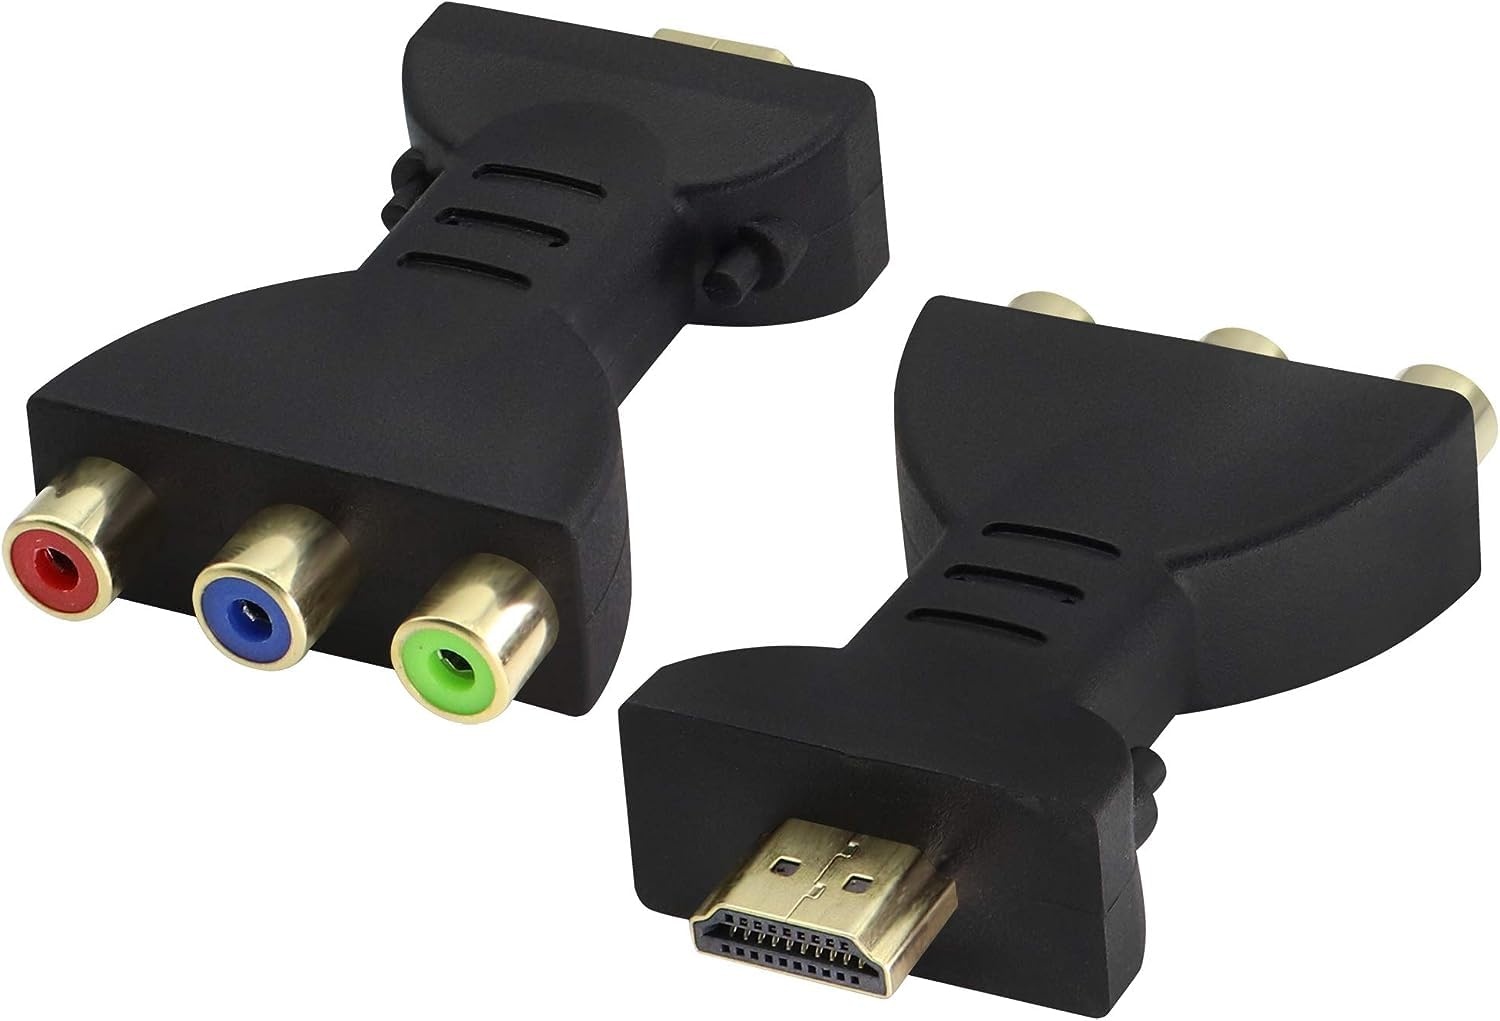 zdyCGTime 2 HDMI RCA Audio und Videoadapter, digitales 1080P 3 Wege Splitter Signal AV HDMI zu 3 RCA Audioadapter Schnittstellenkonverter, geeignet für PC, HDTV, DVD, Projektor usw.